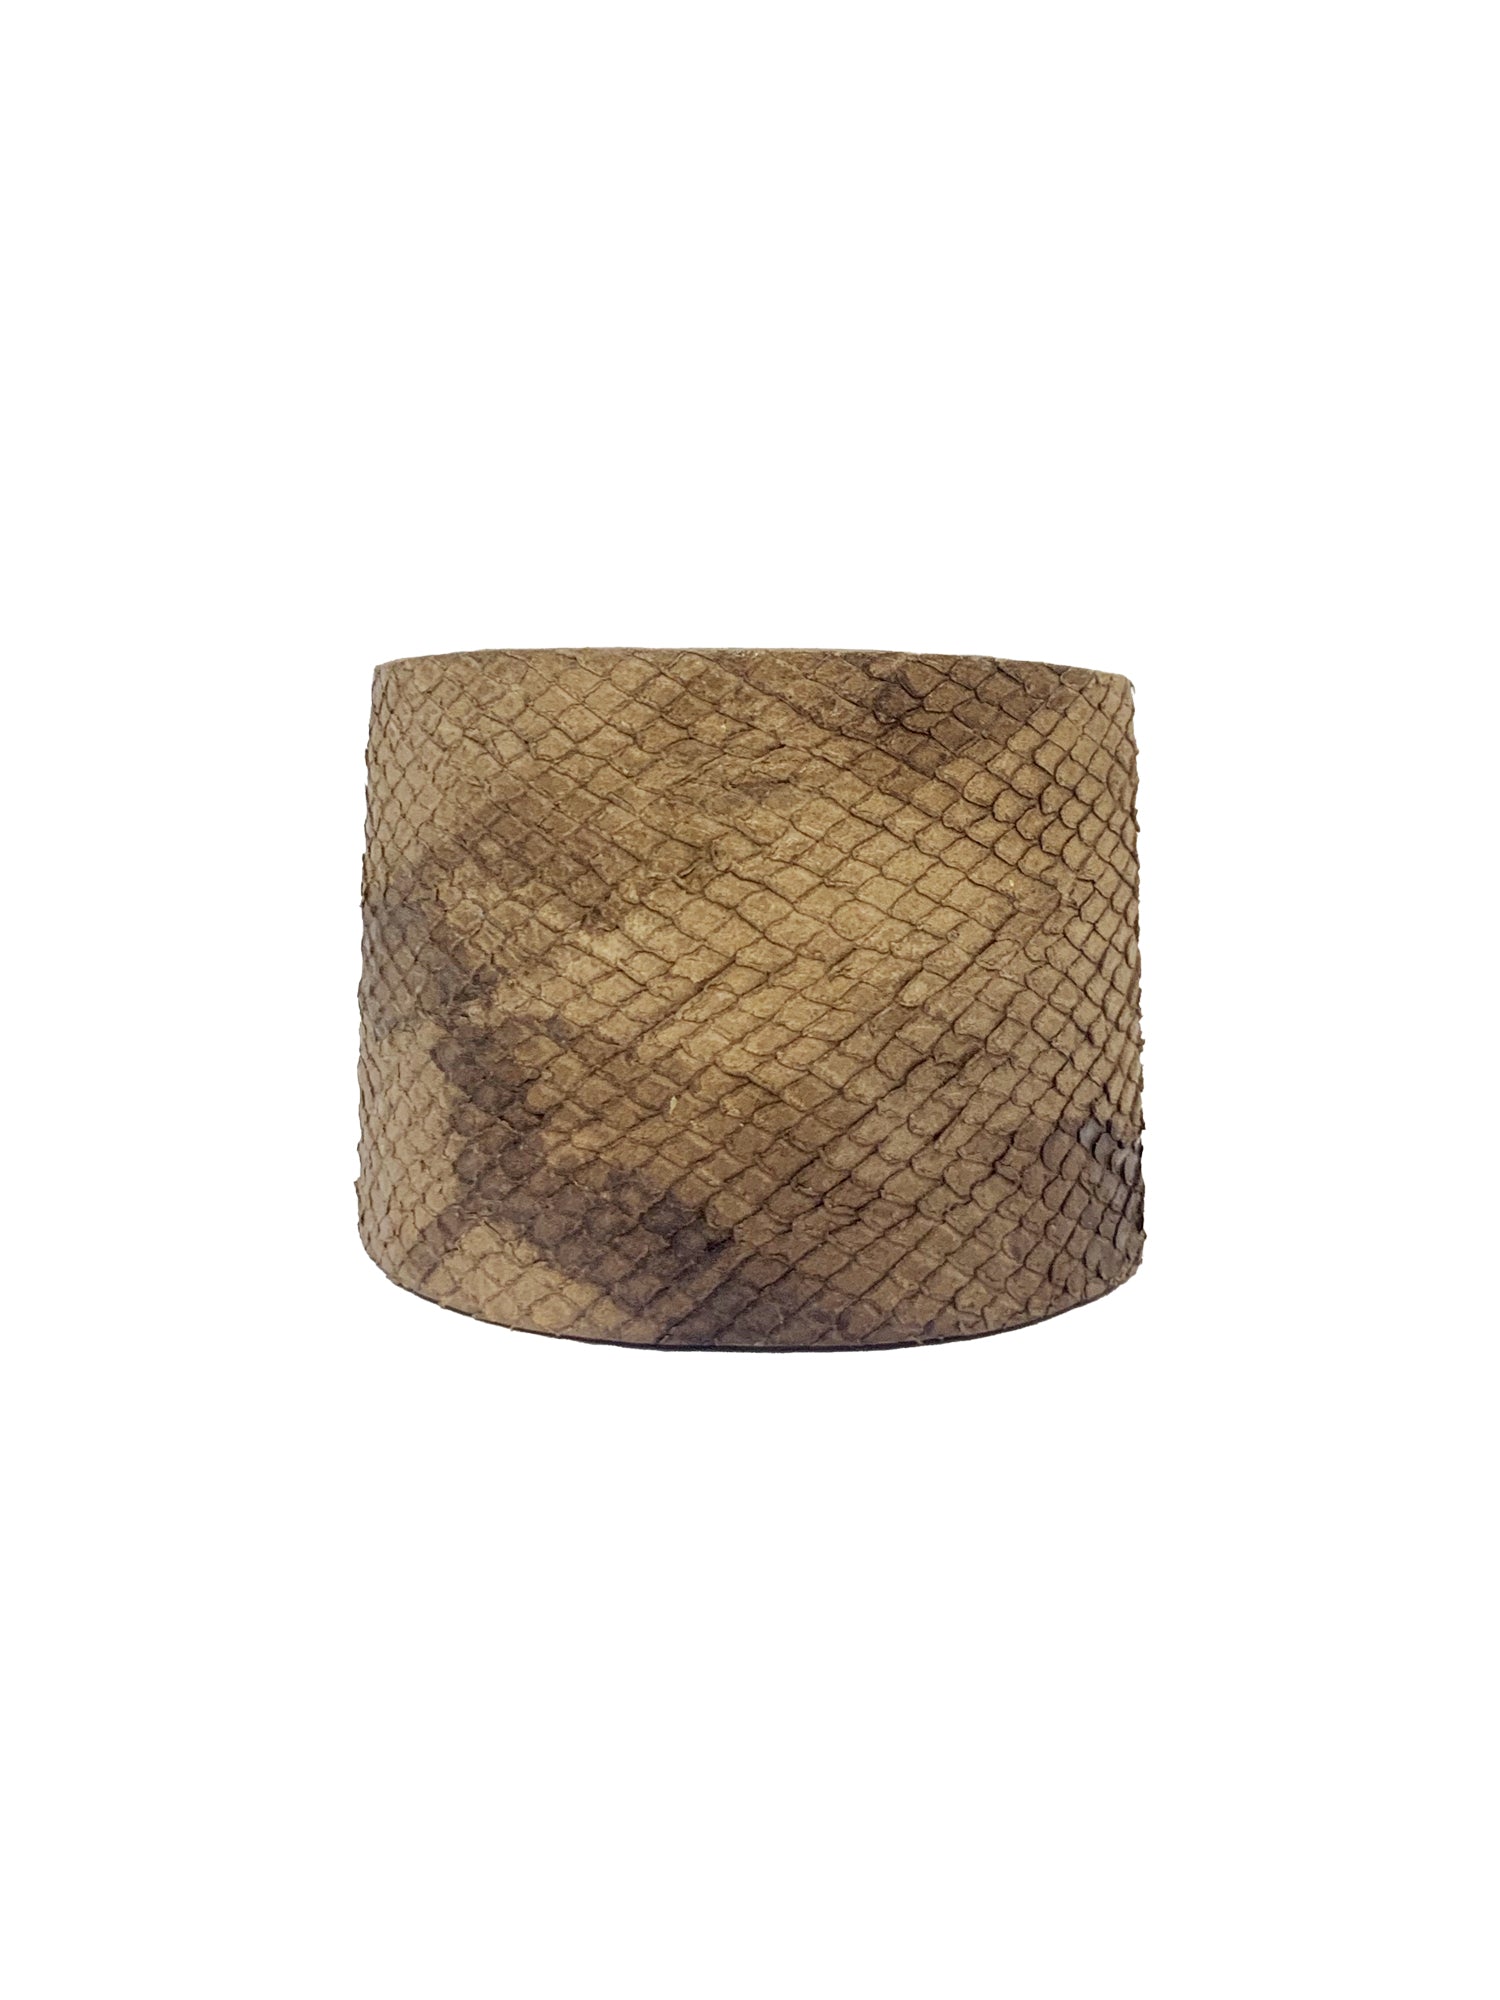 Leather & Wood Wide Cuff Bracelet - Brown